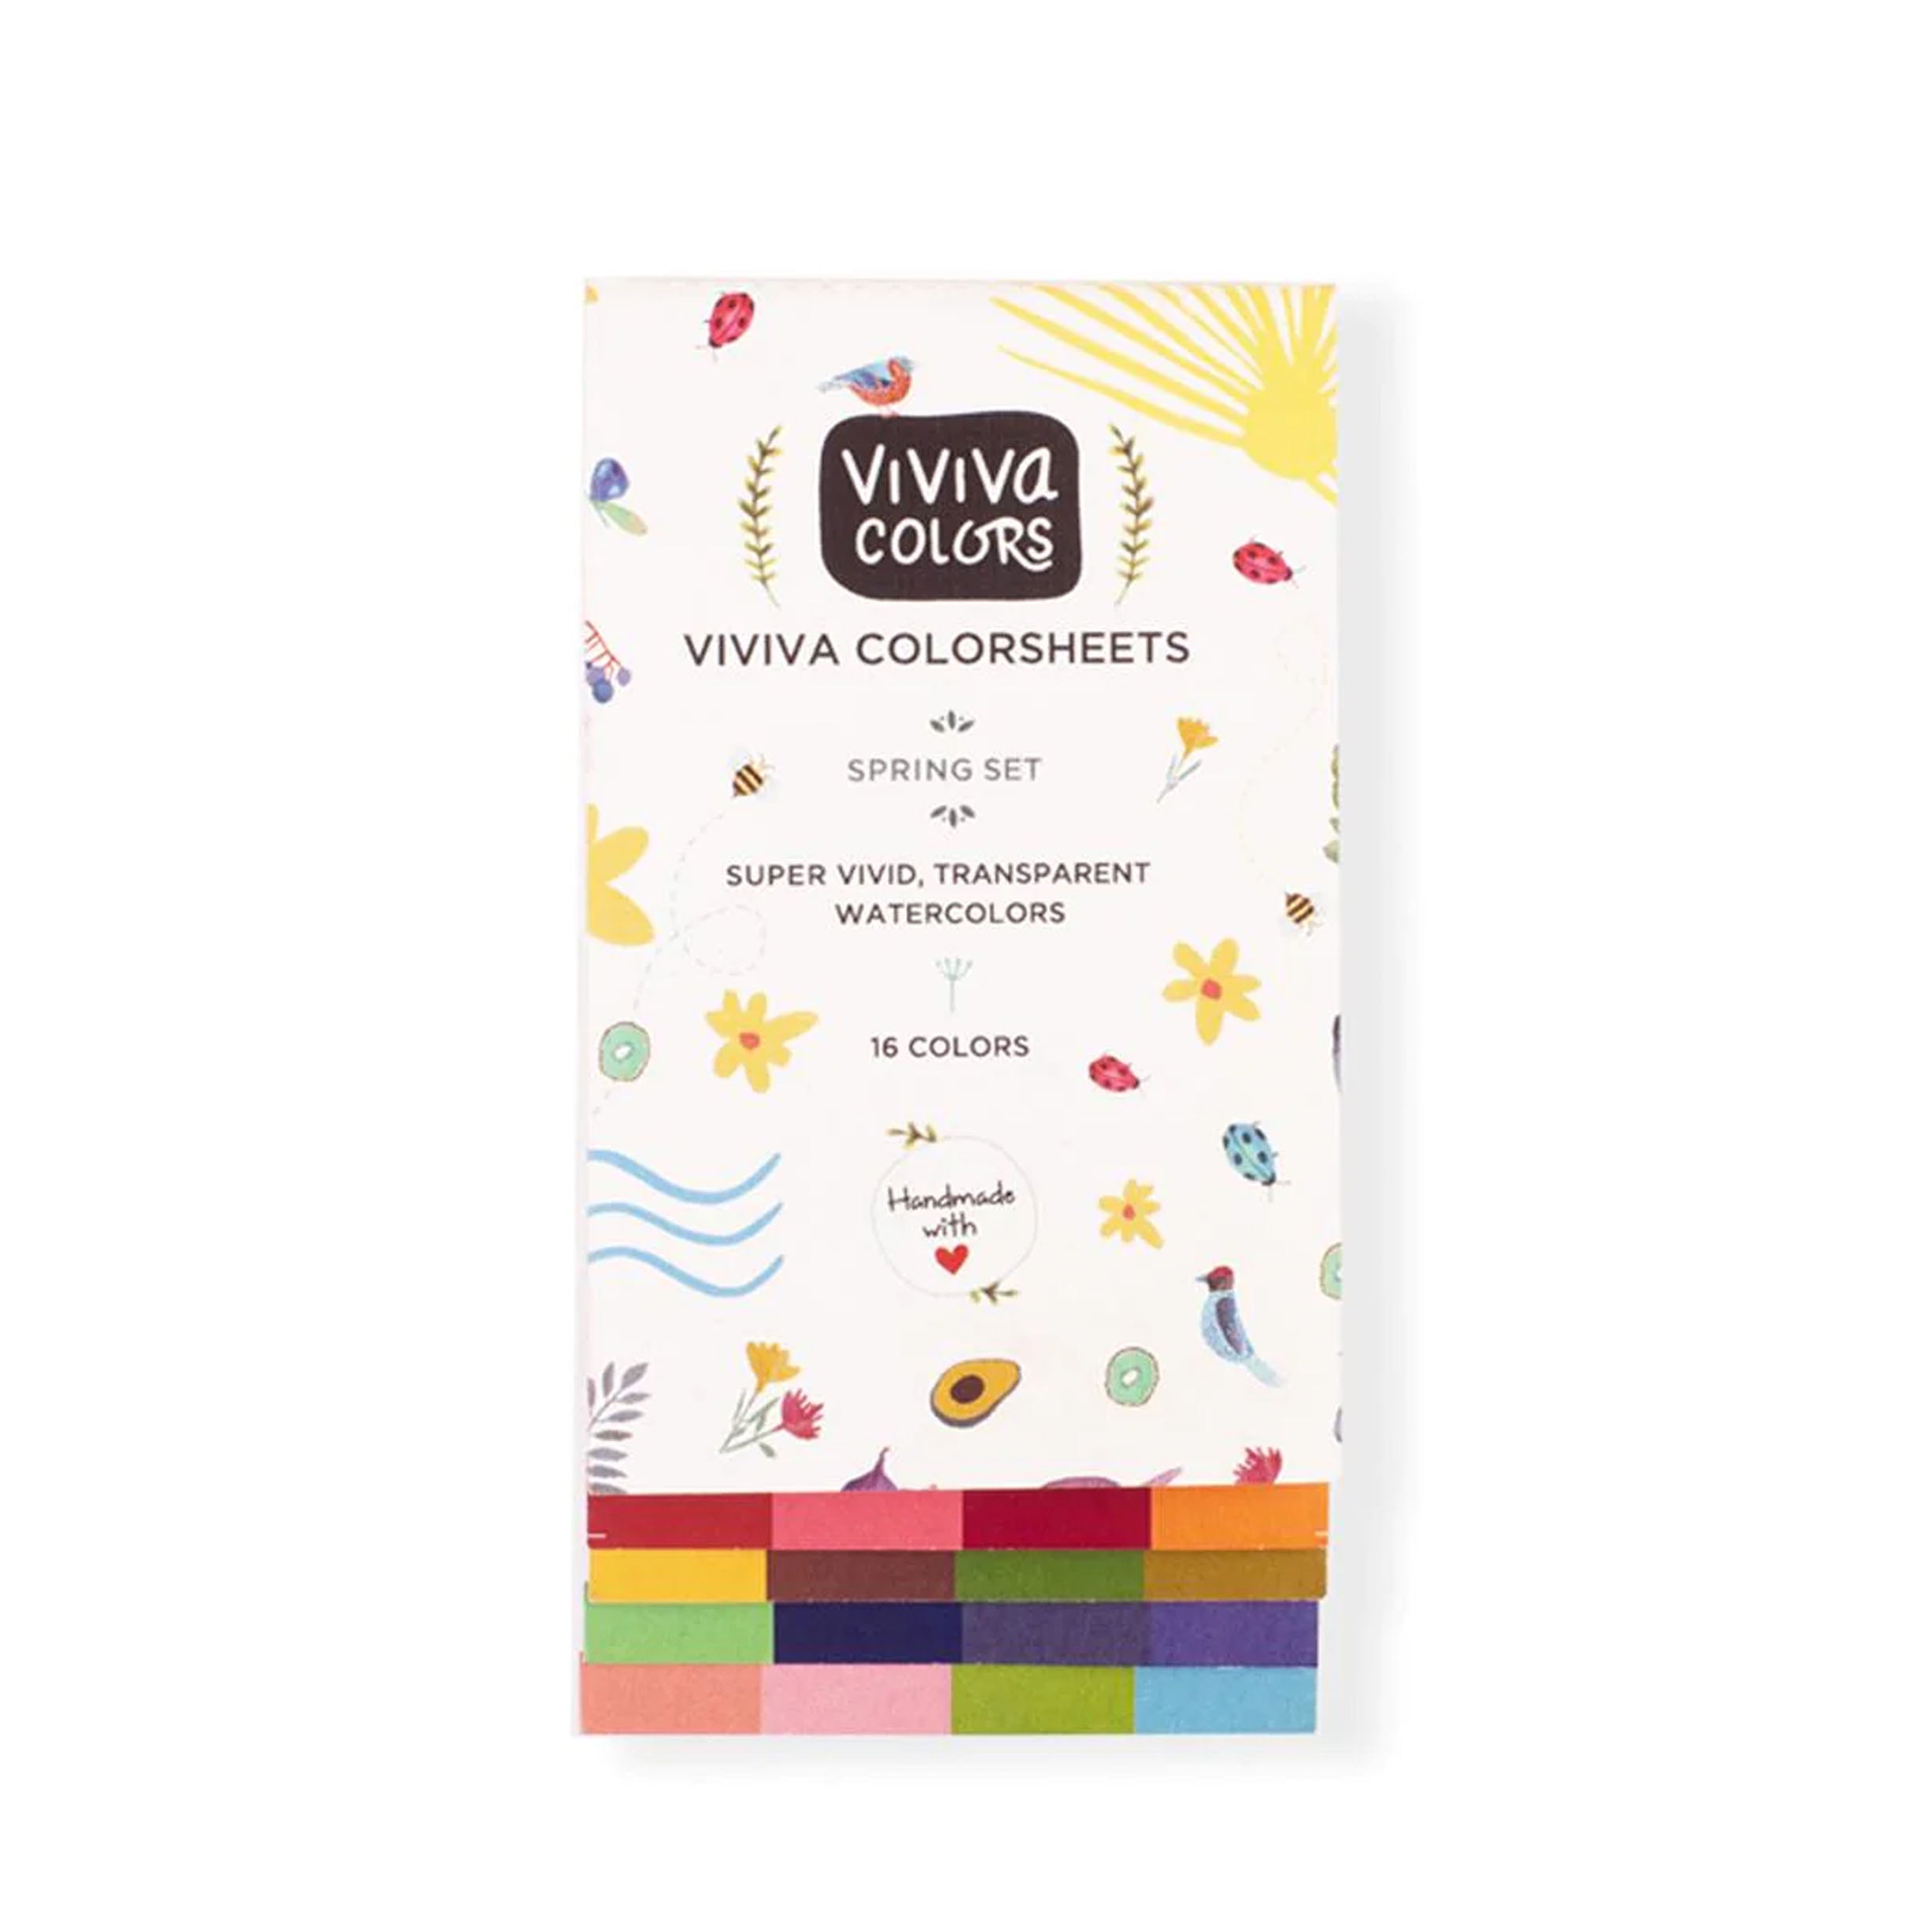 Viviva Watercolor Colorsheets, Spring Set of 16